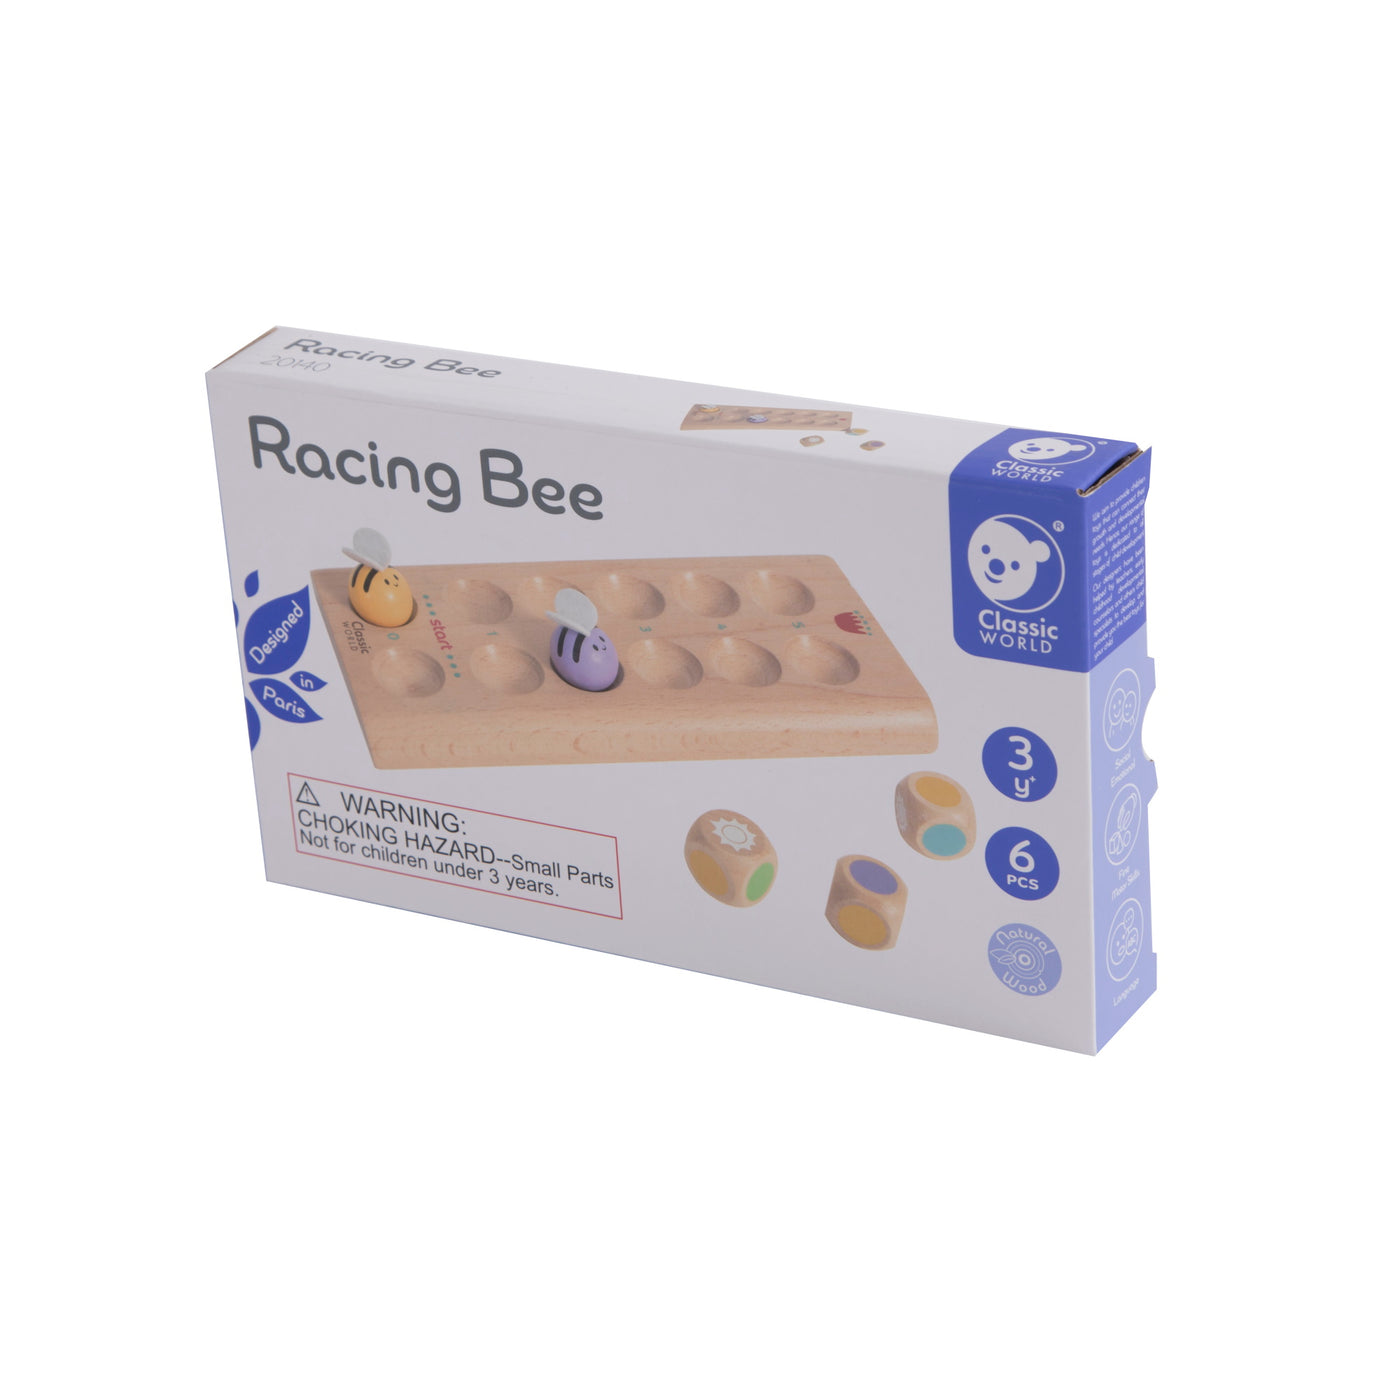 Racing Bee Game